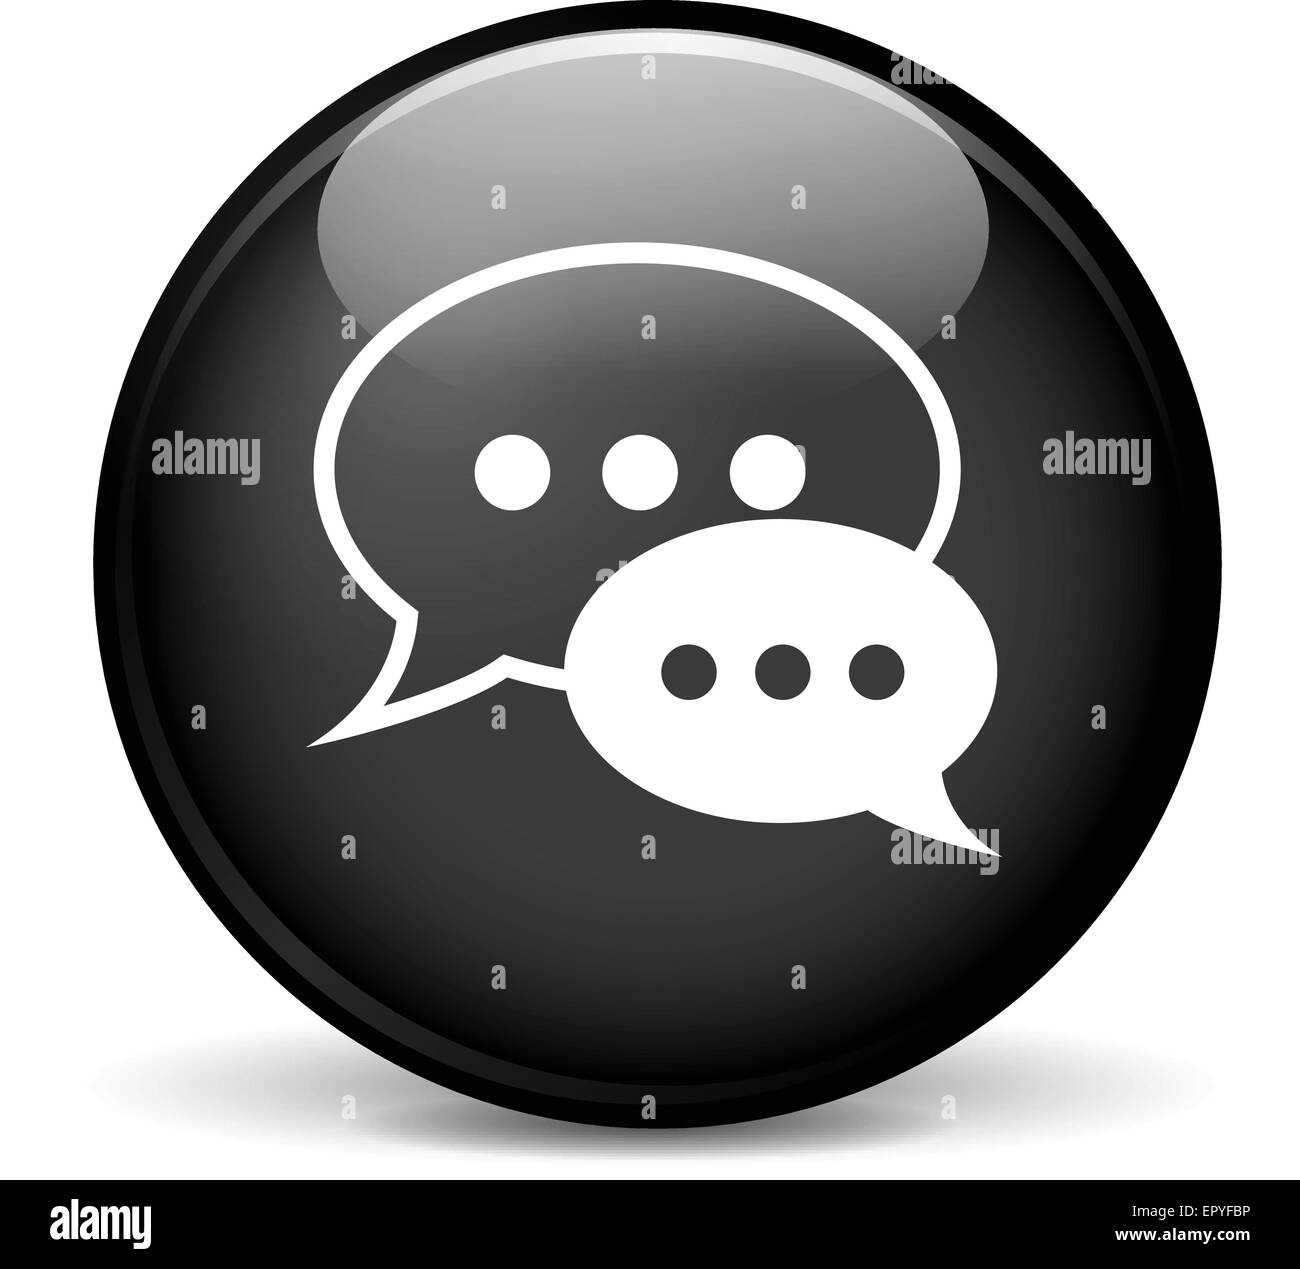 Illustration of speech bubbles modern design black sphere icon Stock Vector